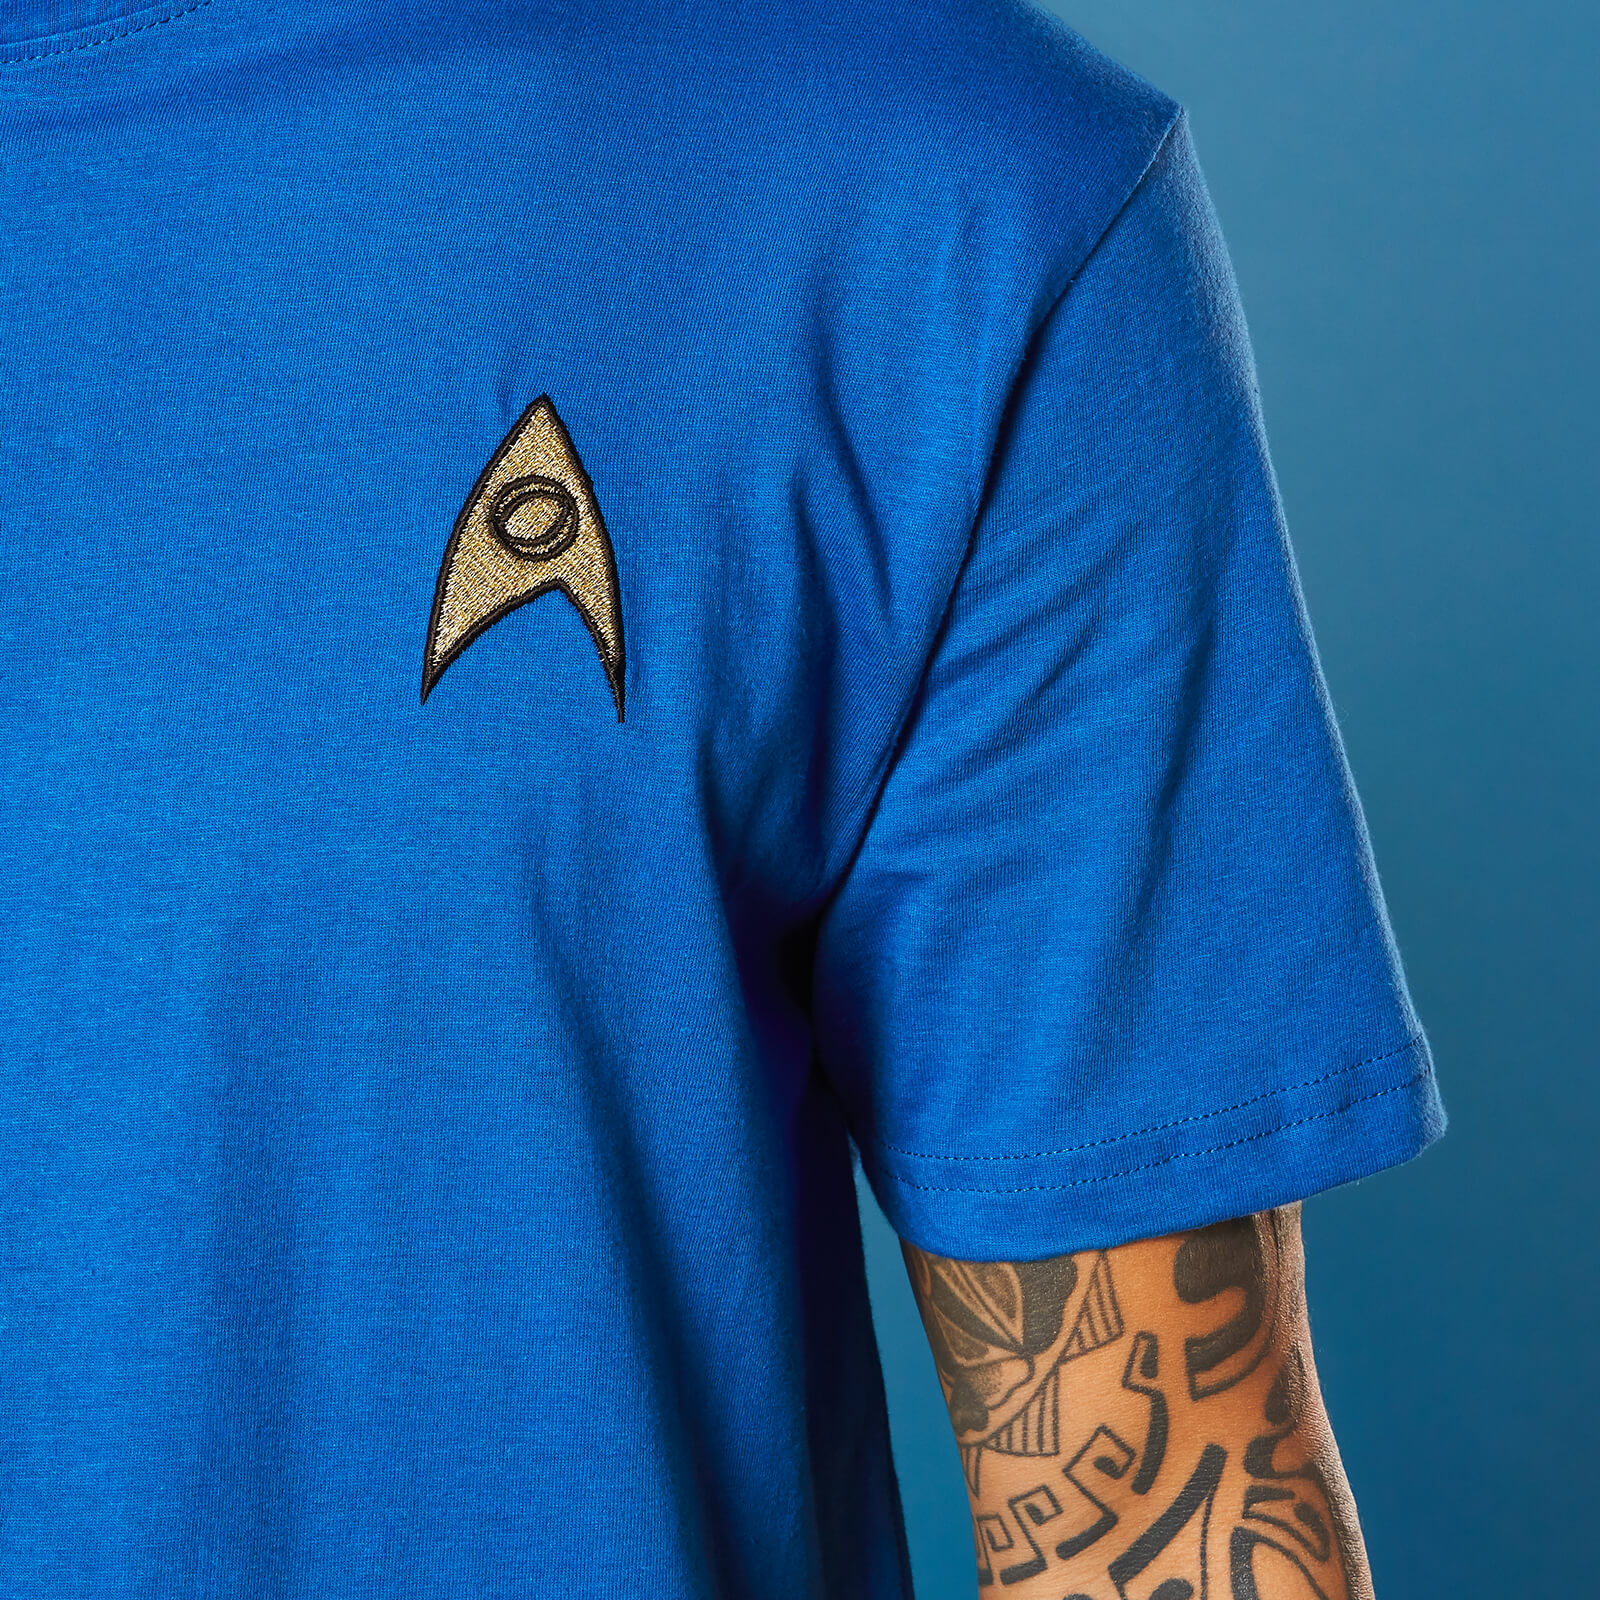 Embroidered Science Badge Star Trek T-shirt - Royal Blue - M - royal blue